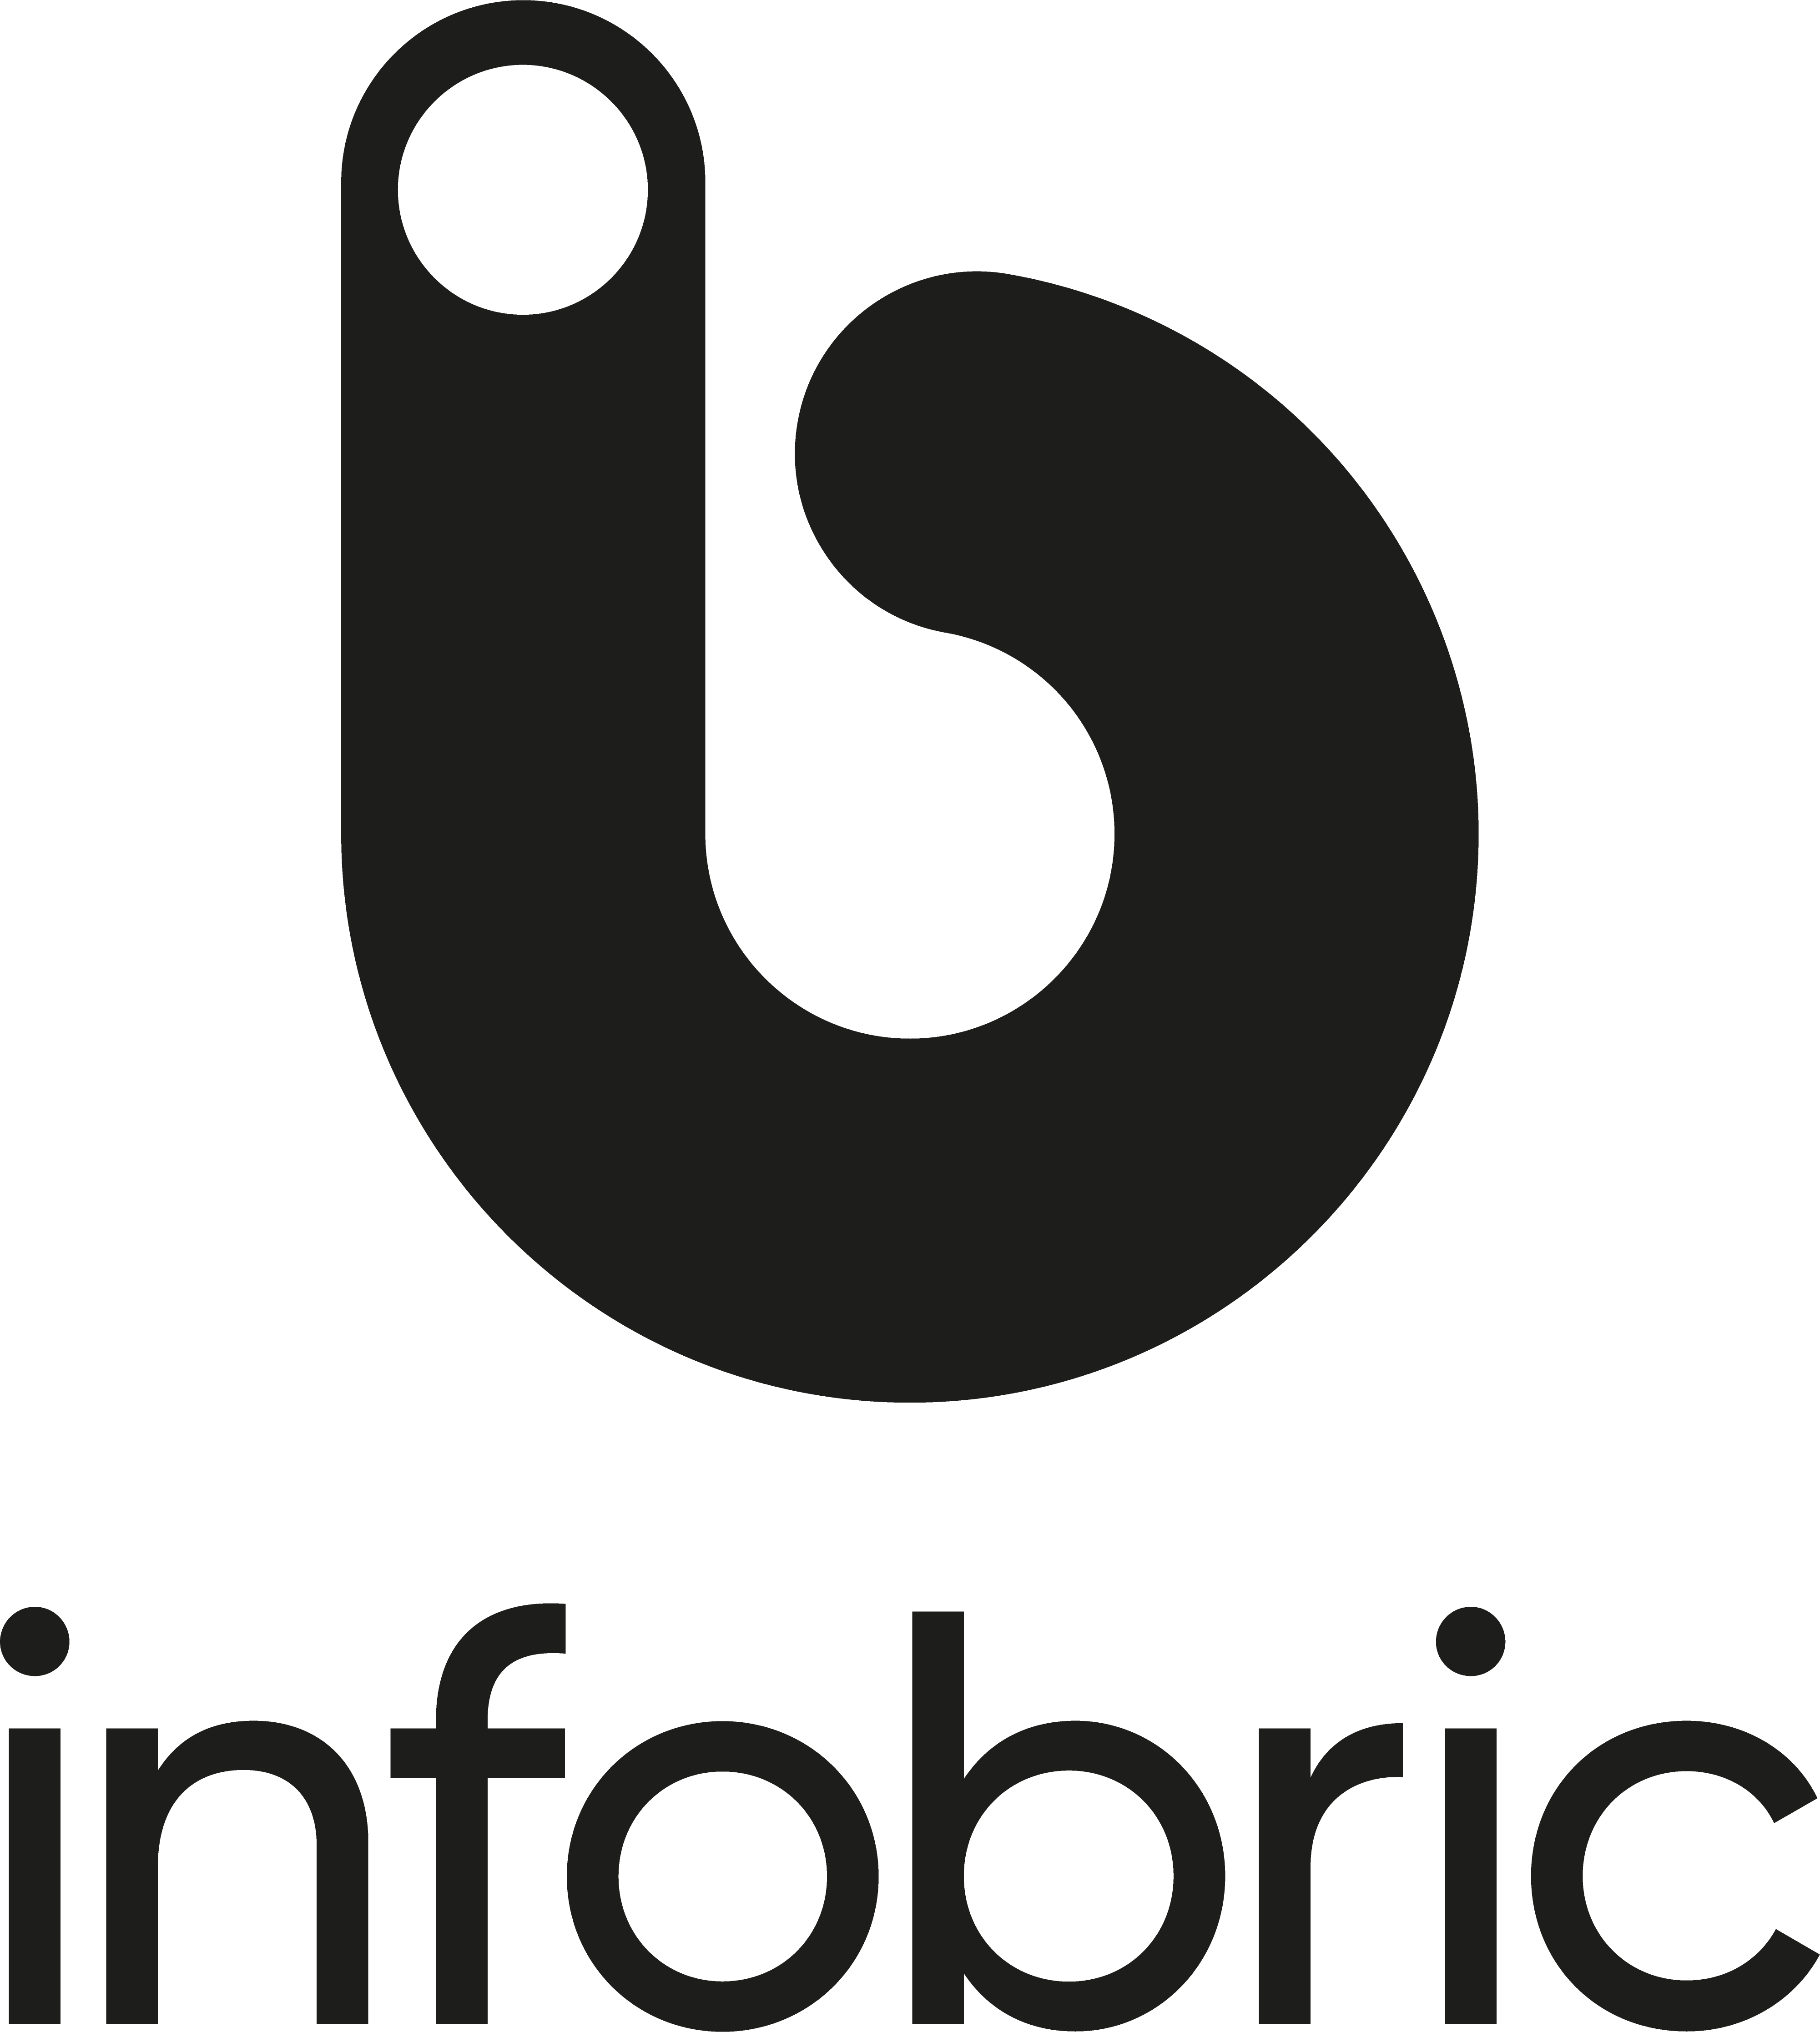 Company logo for Infobric Field